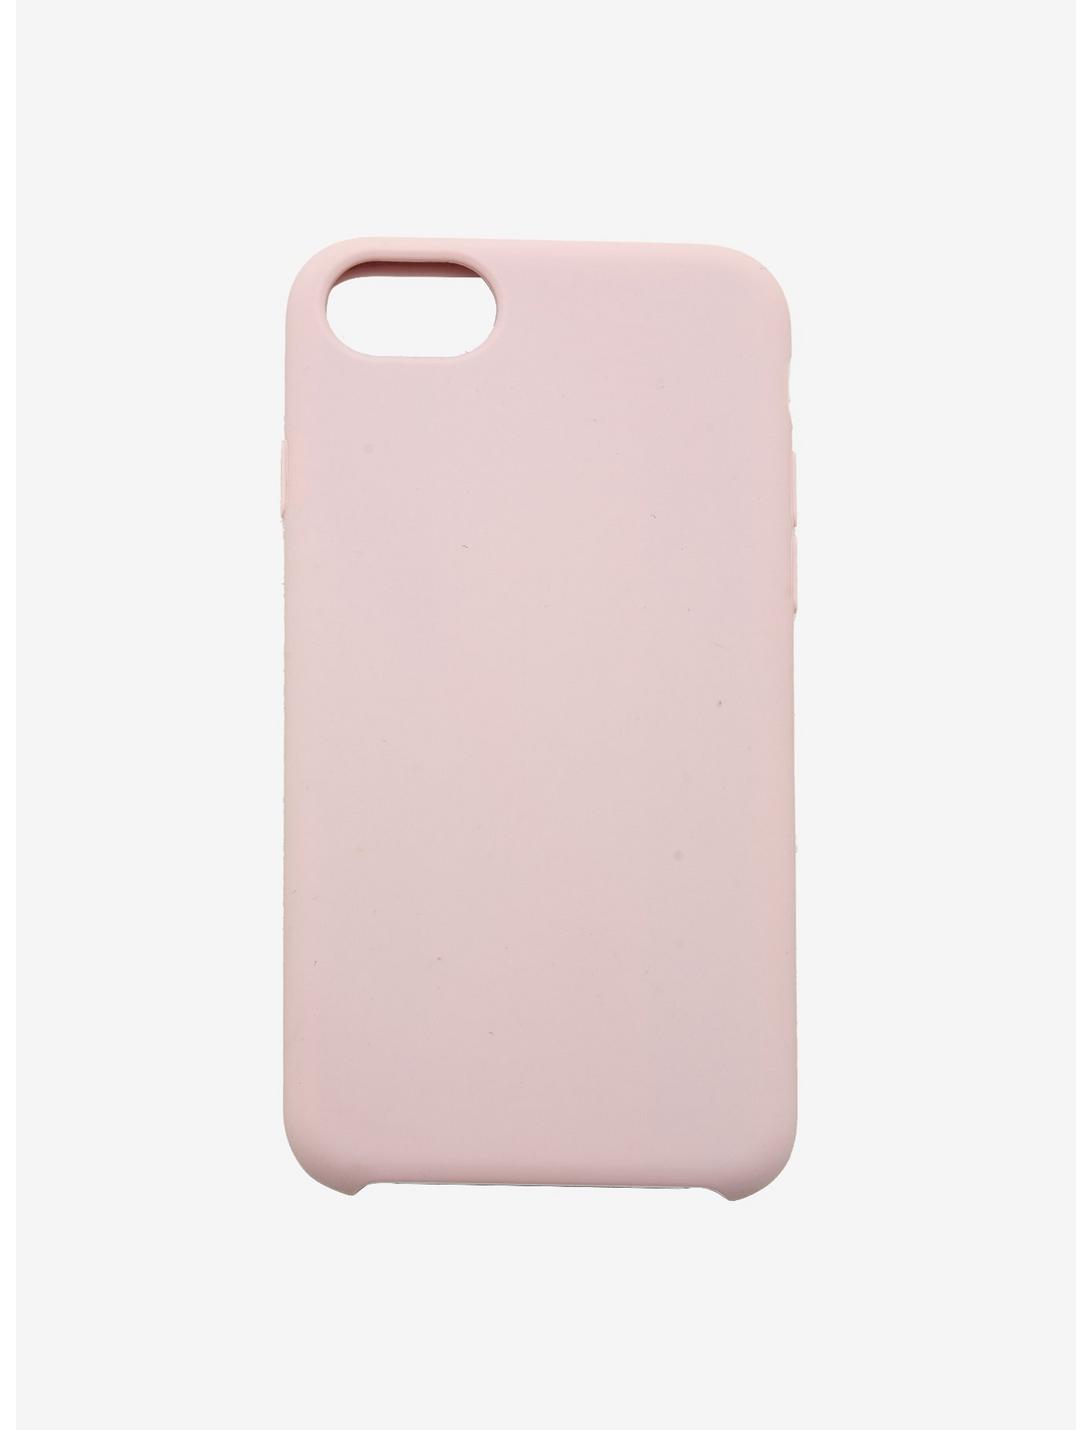 Blush Pink Silicone iPhone 7/8 Case, , hi-res